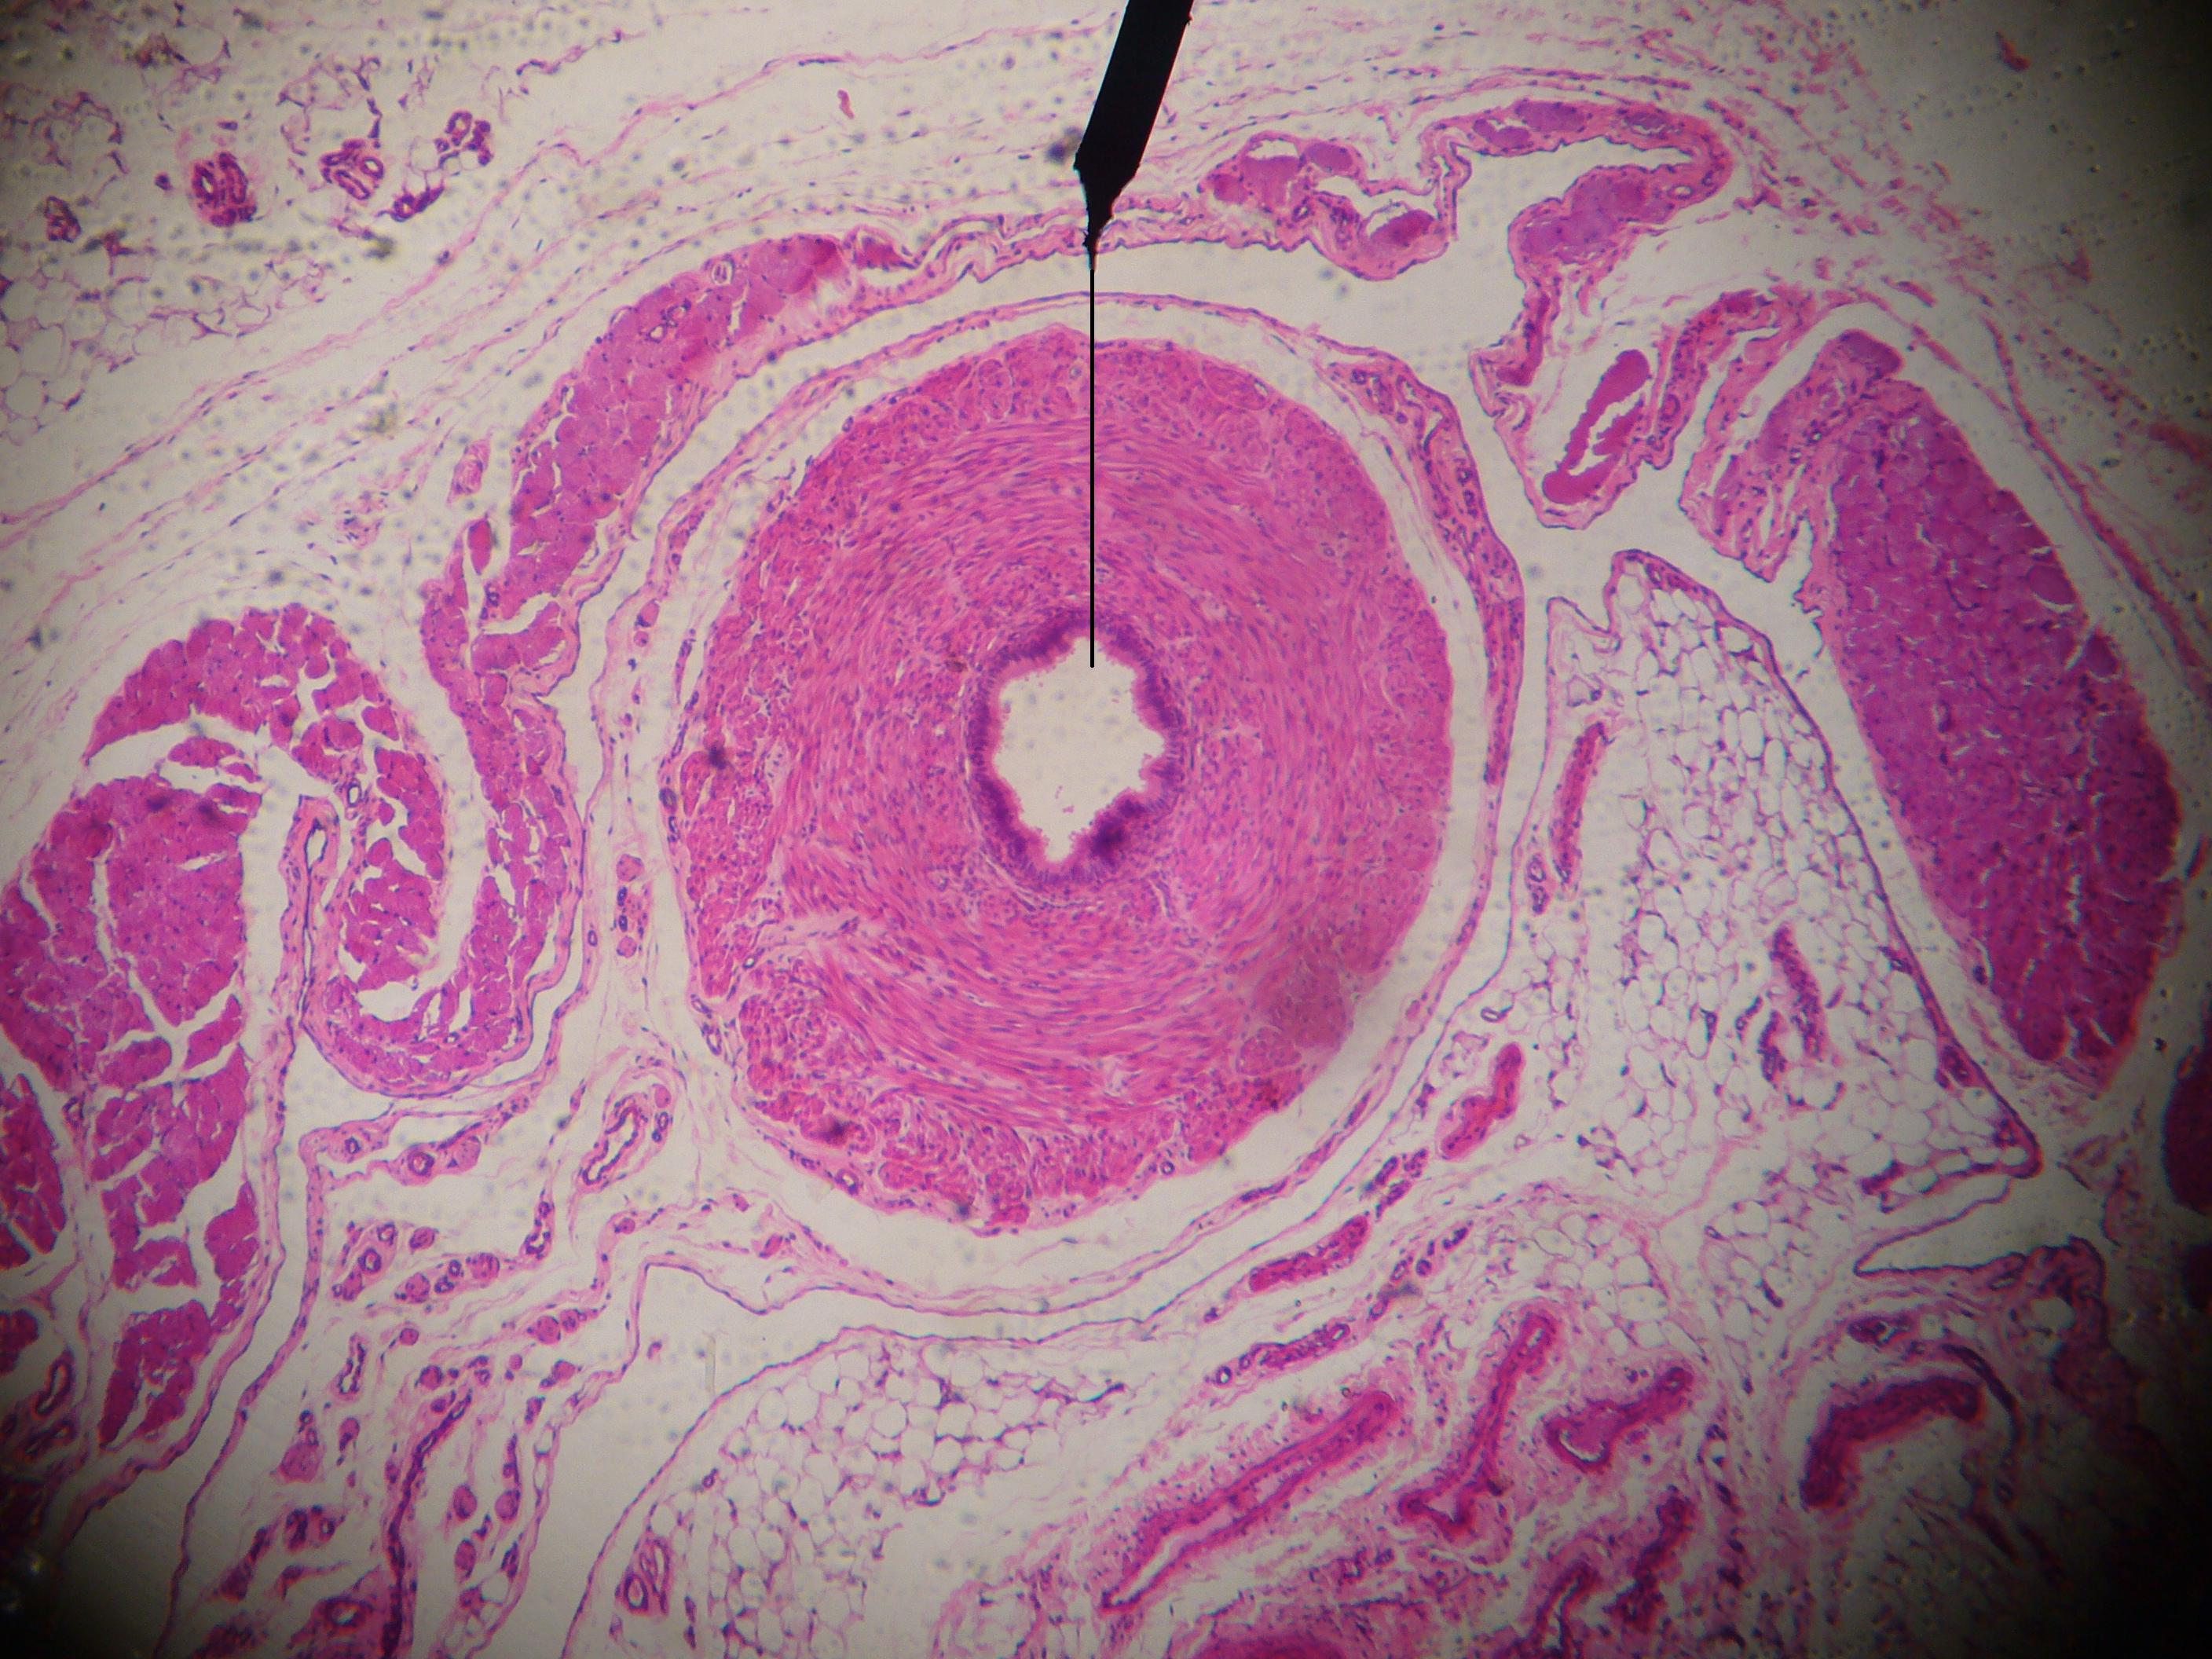 Microscopic cross section.